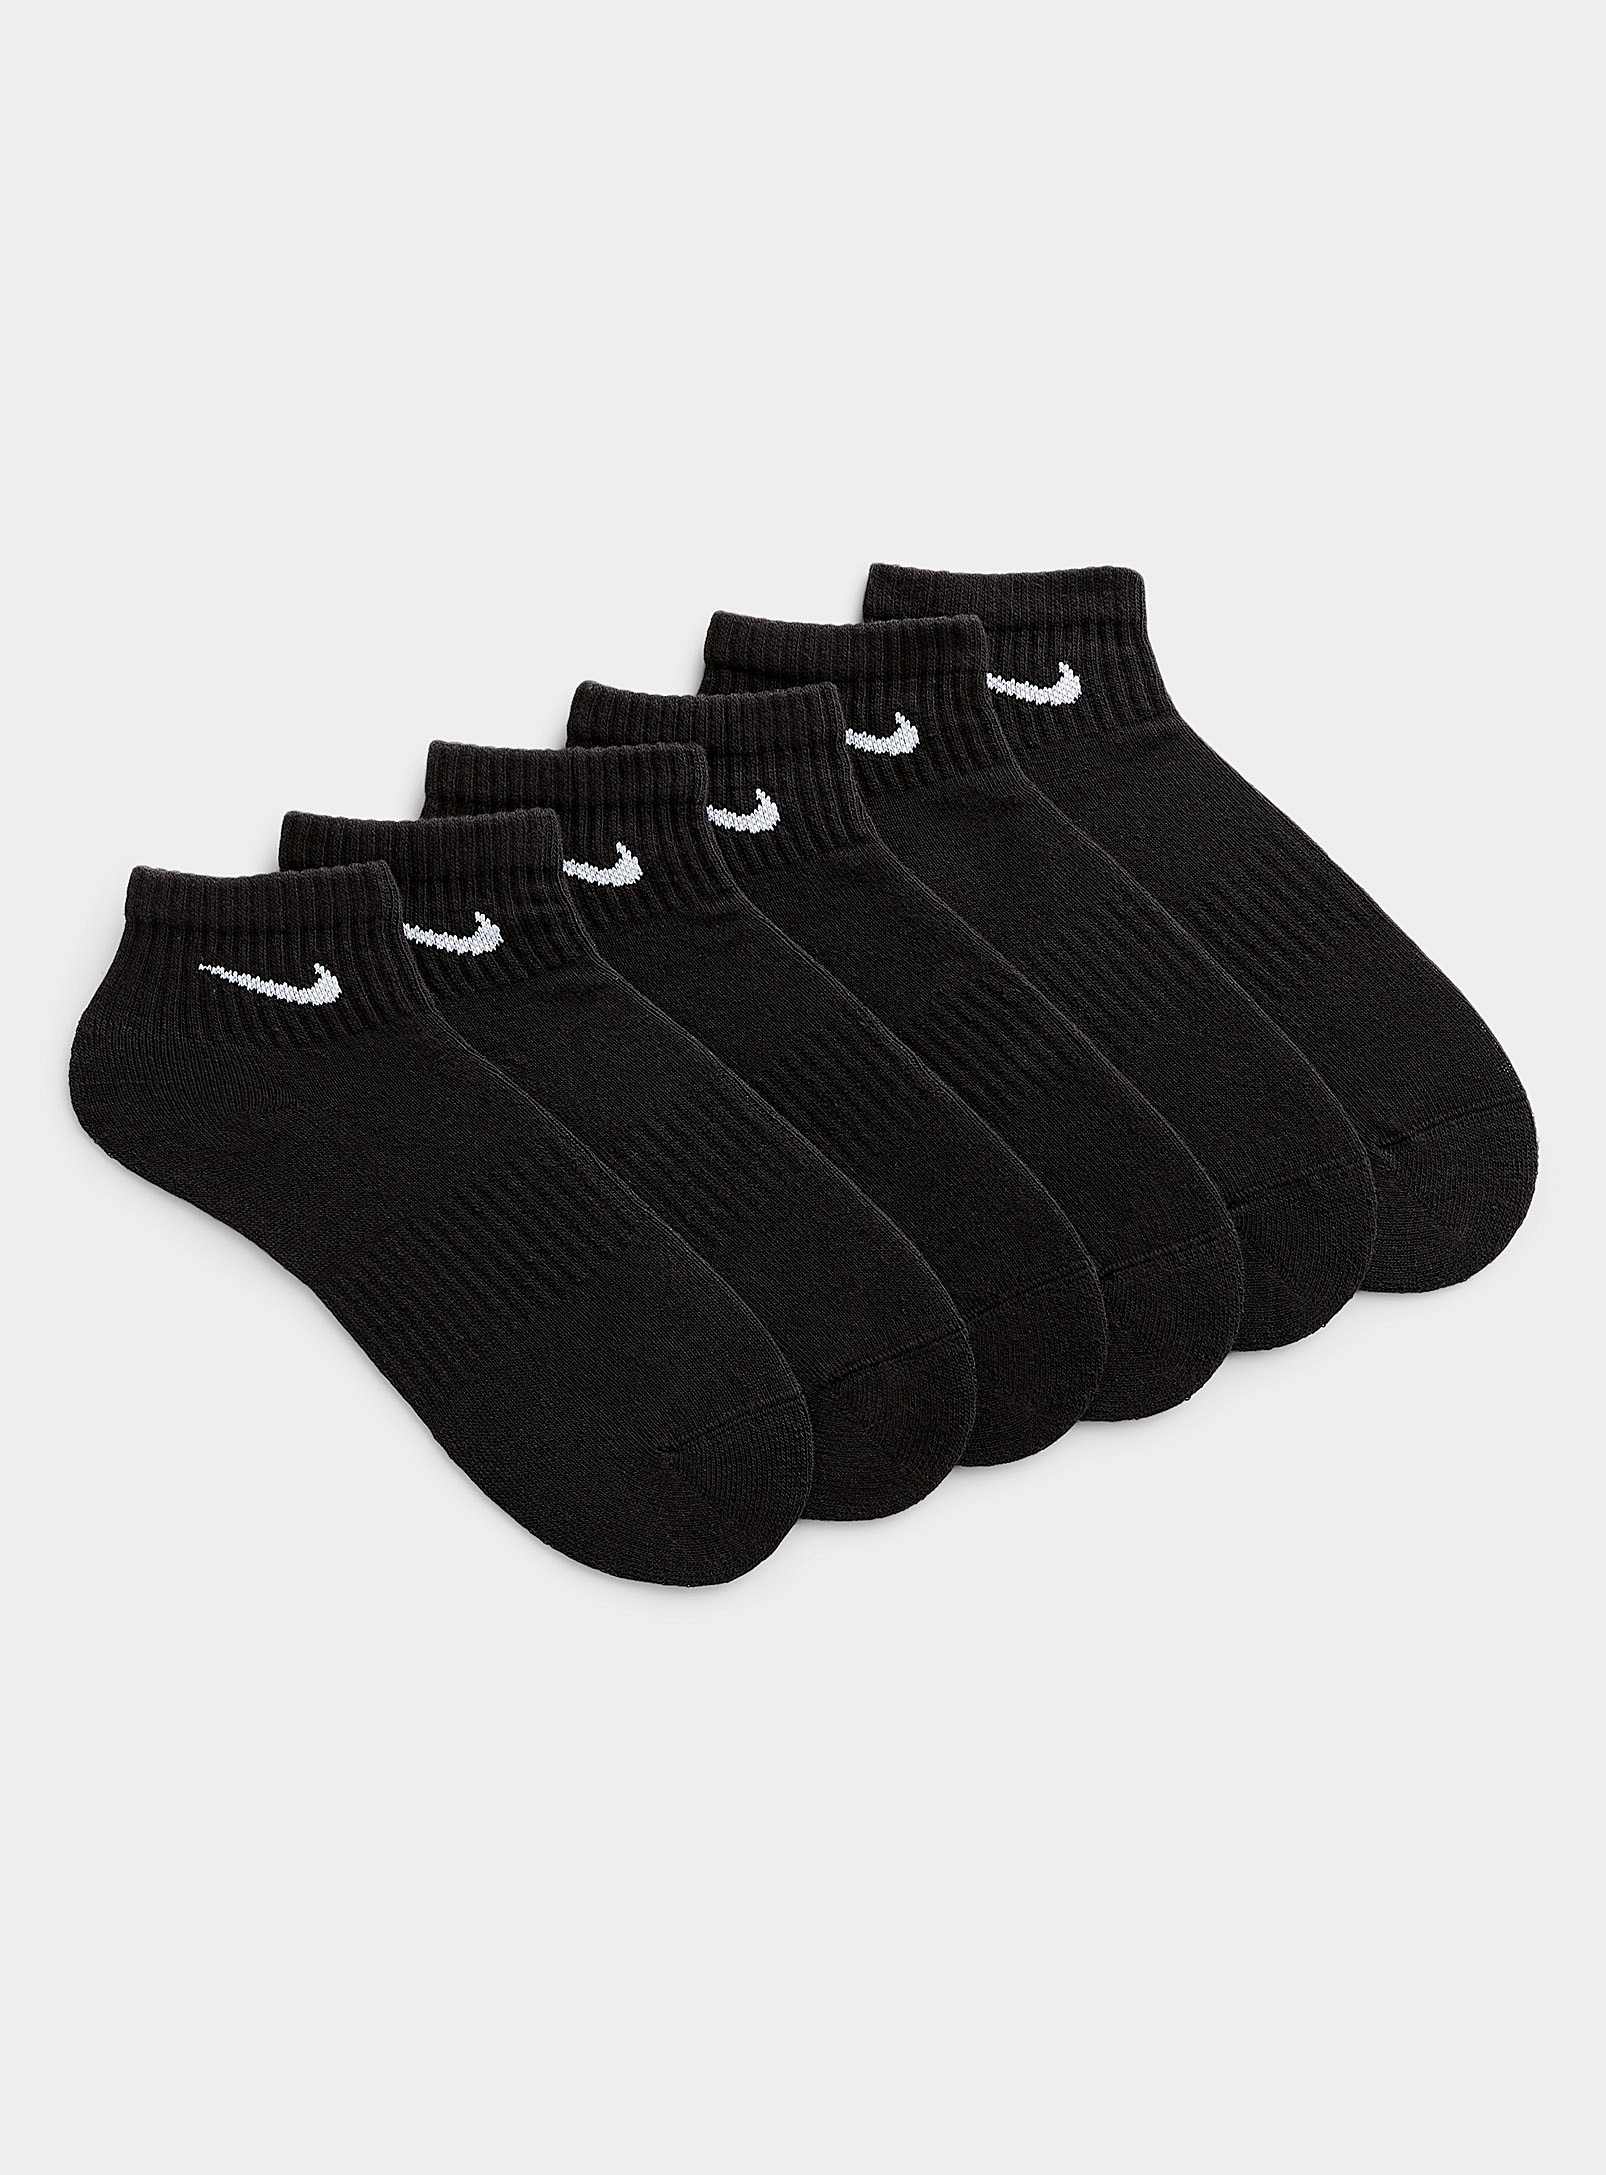 Nike Everyday Black Ankle Socks 6-pack